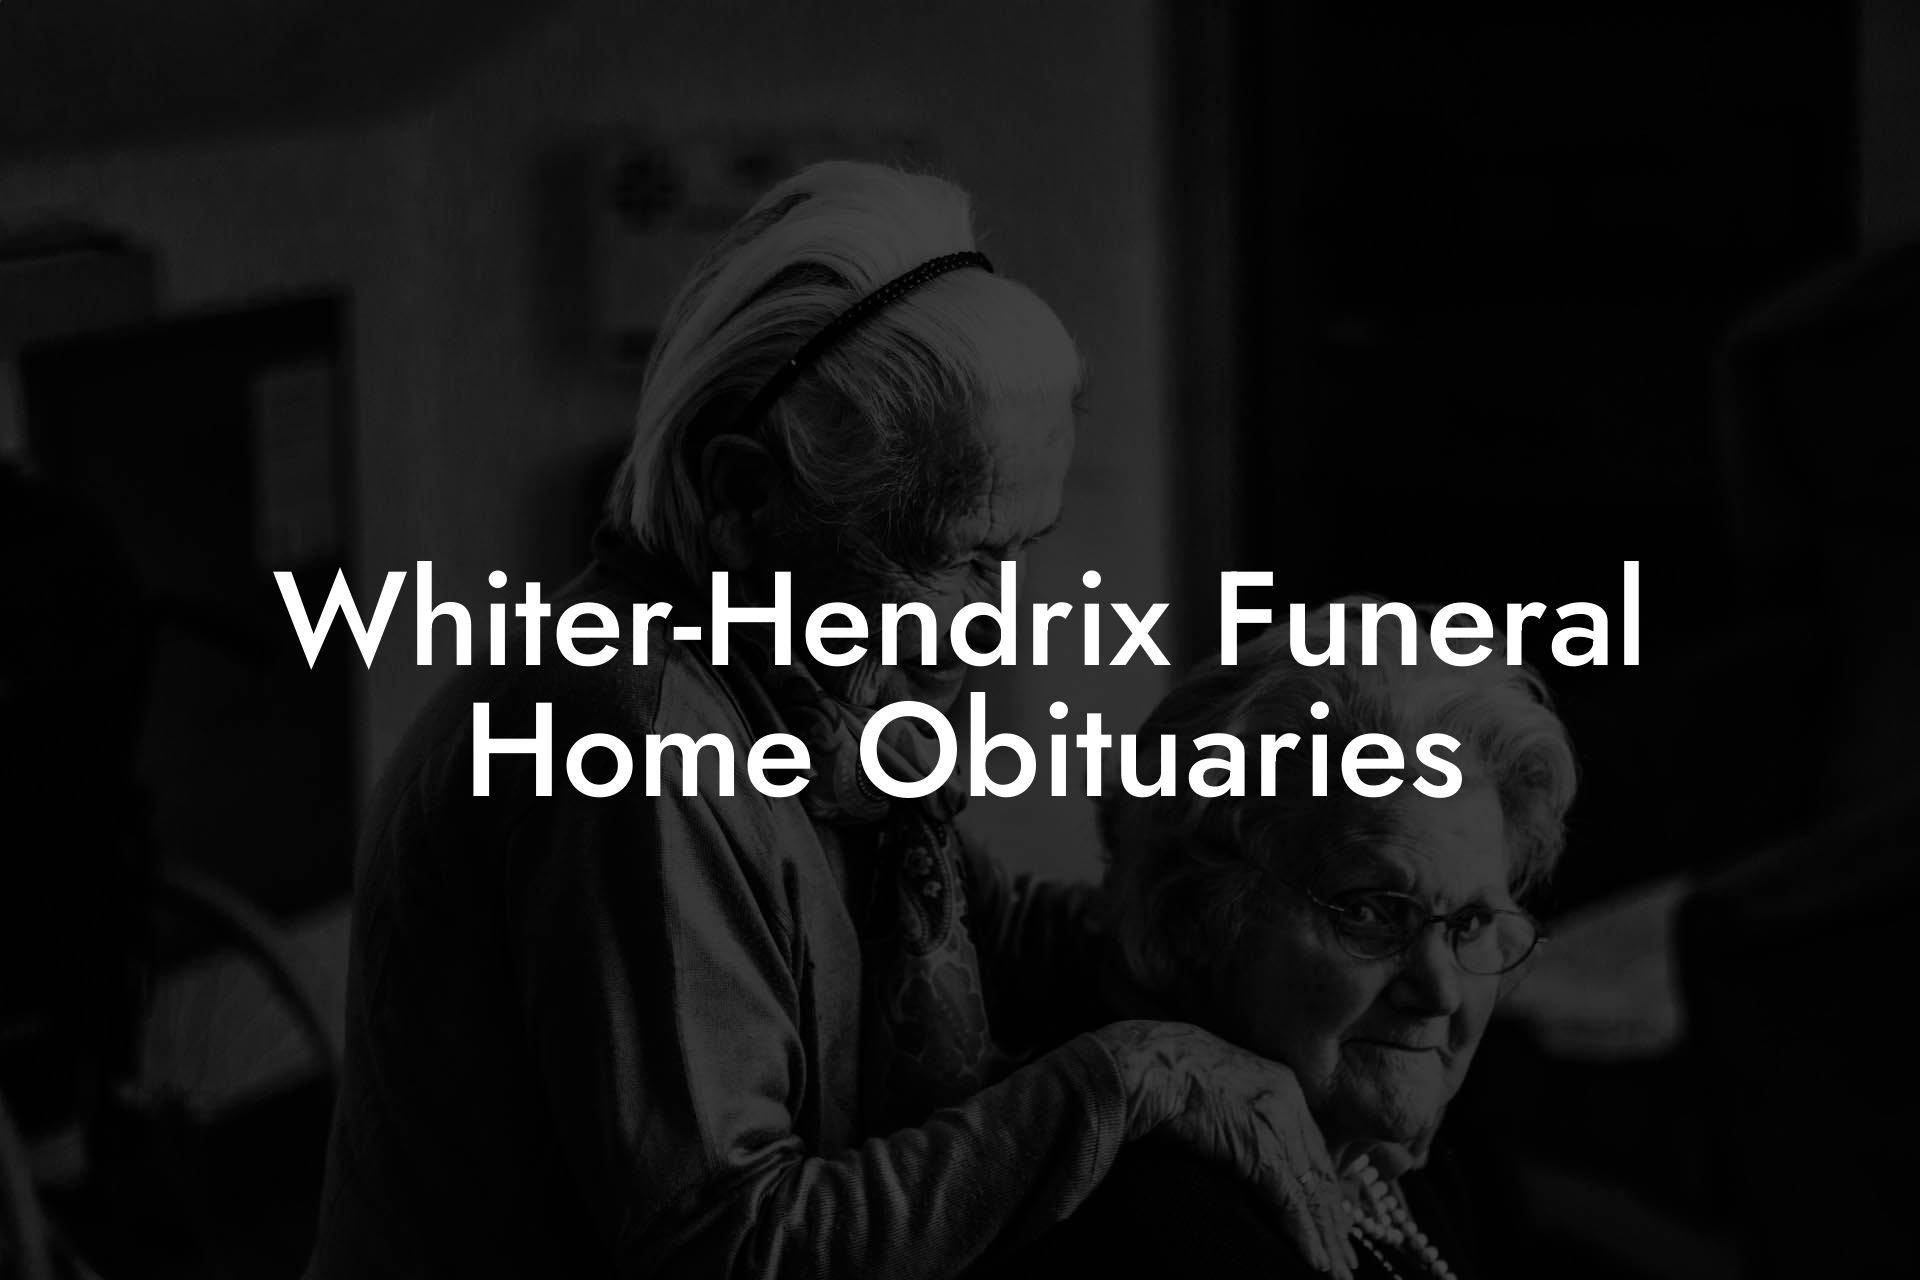 Whiter-Hendrix Funeral Home Obituaries